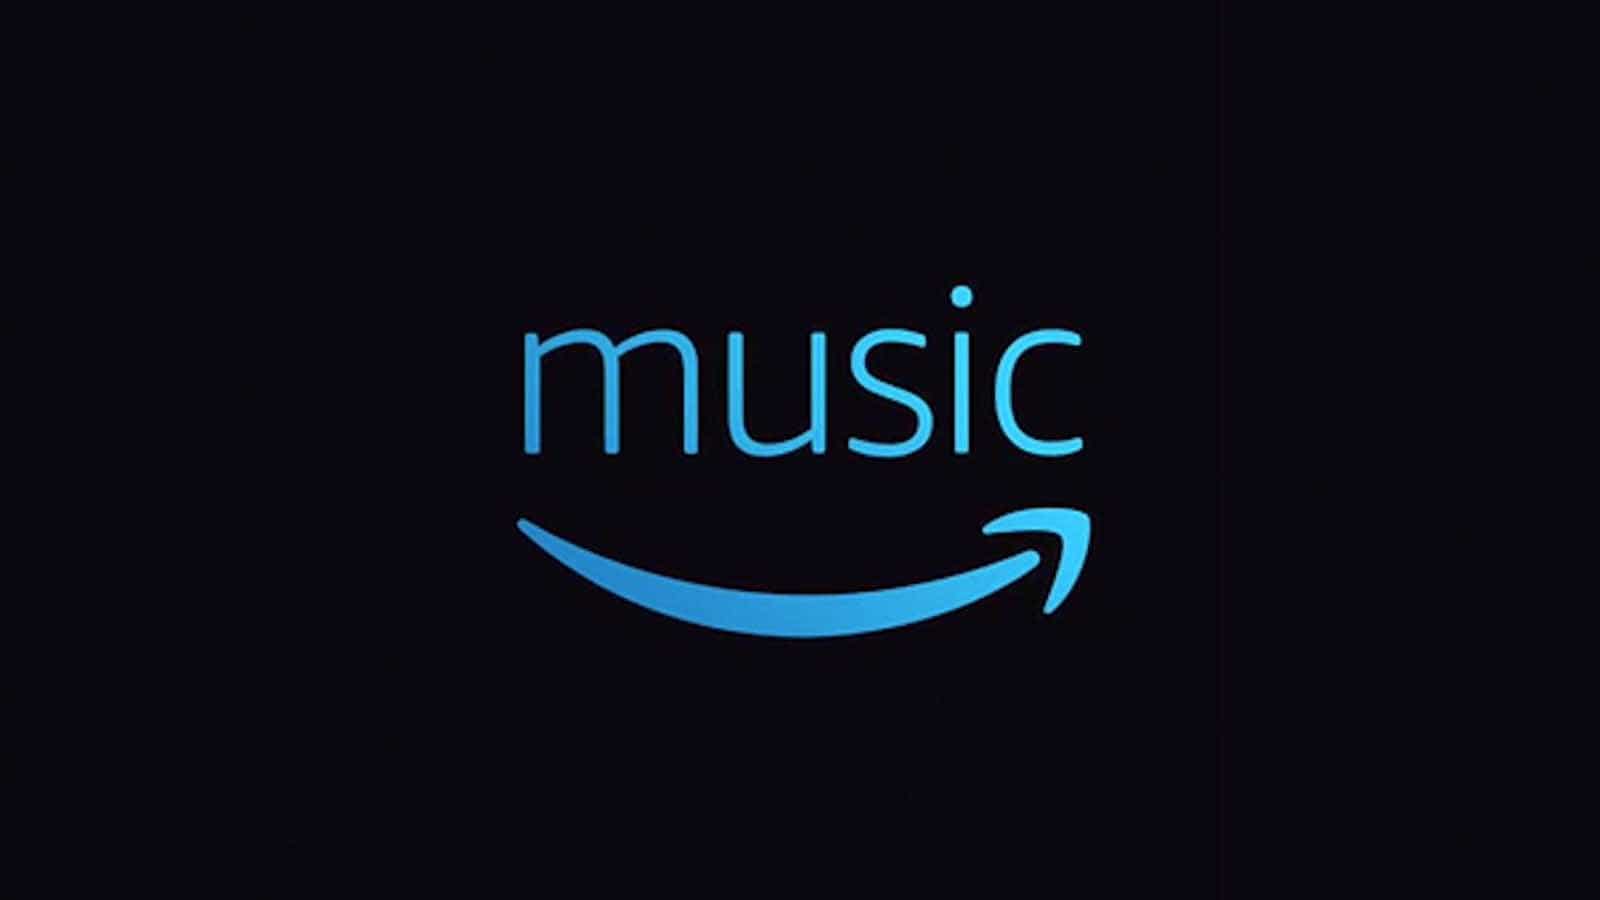 Amazon Music Logo - Amazon adds free music through Amazon Music to smartphones